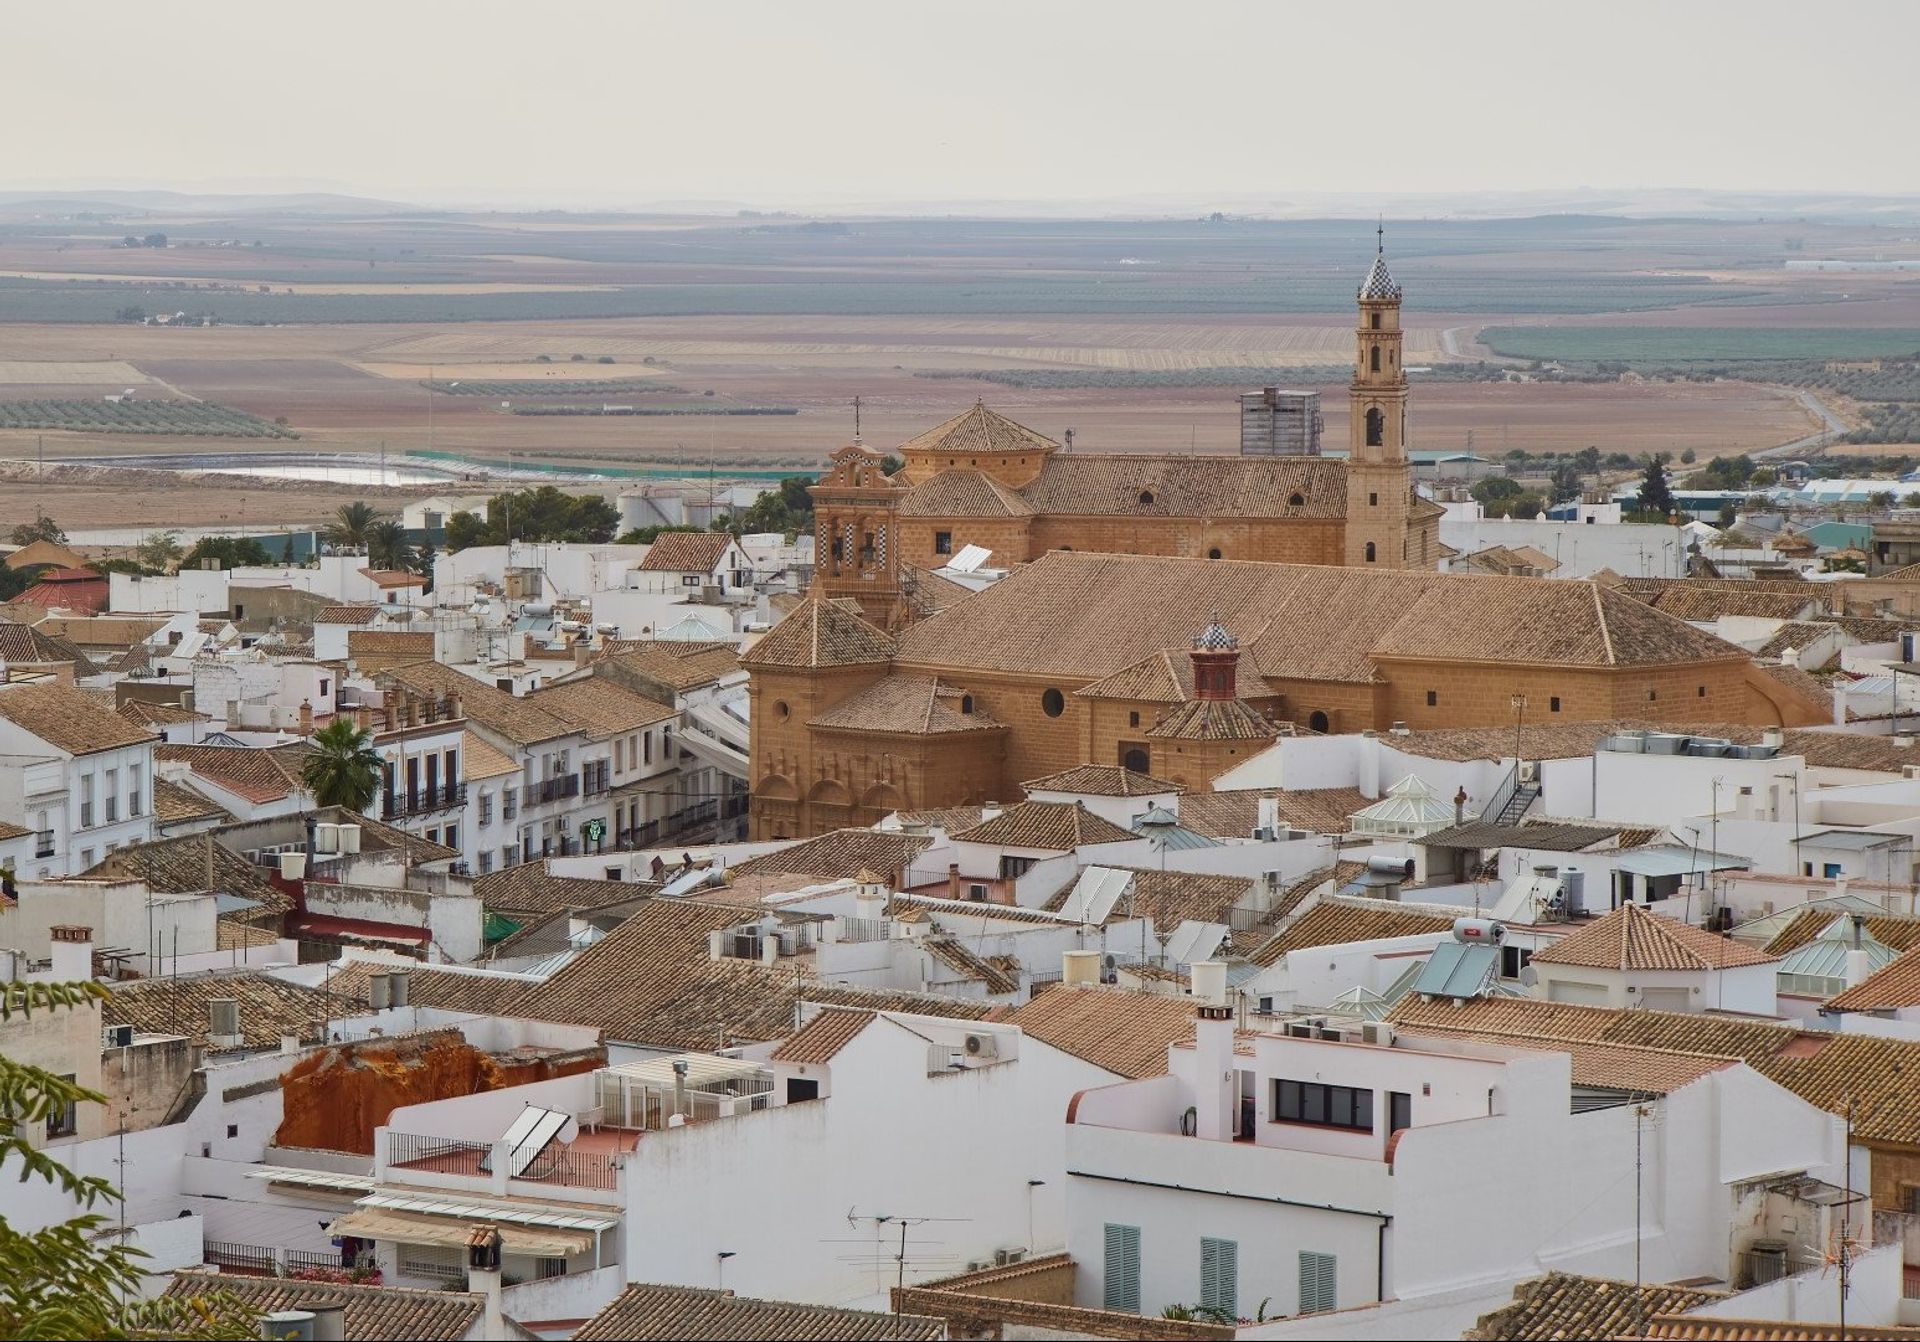 The 16th century Collegiate Church in Osuna dominates the landscape of this Pueblo Blanco